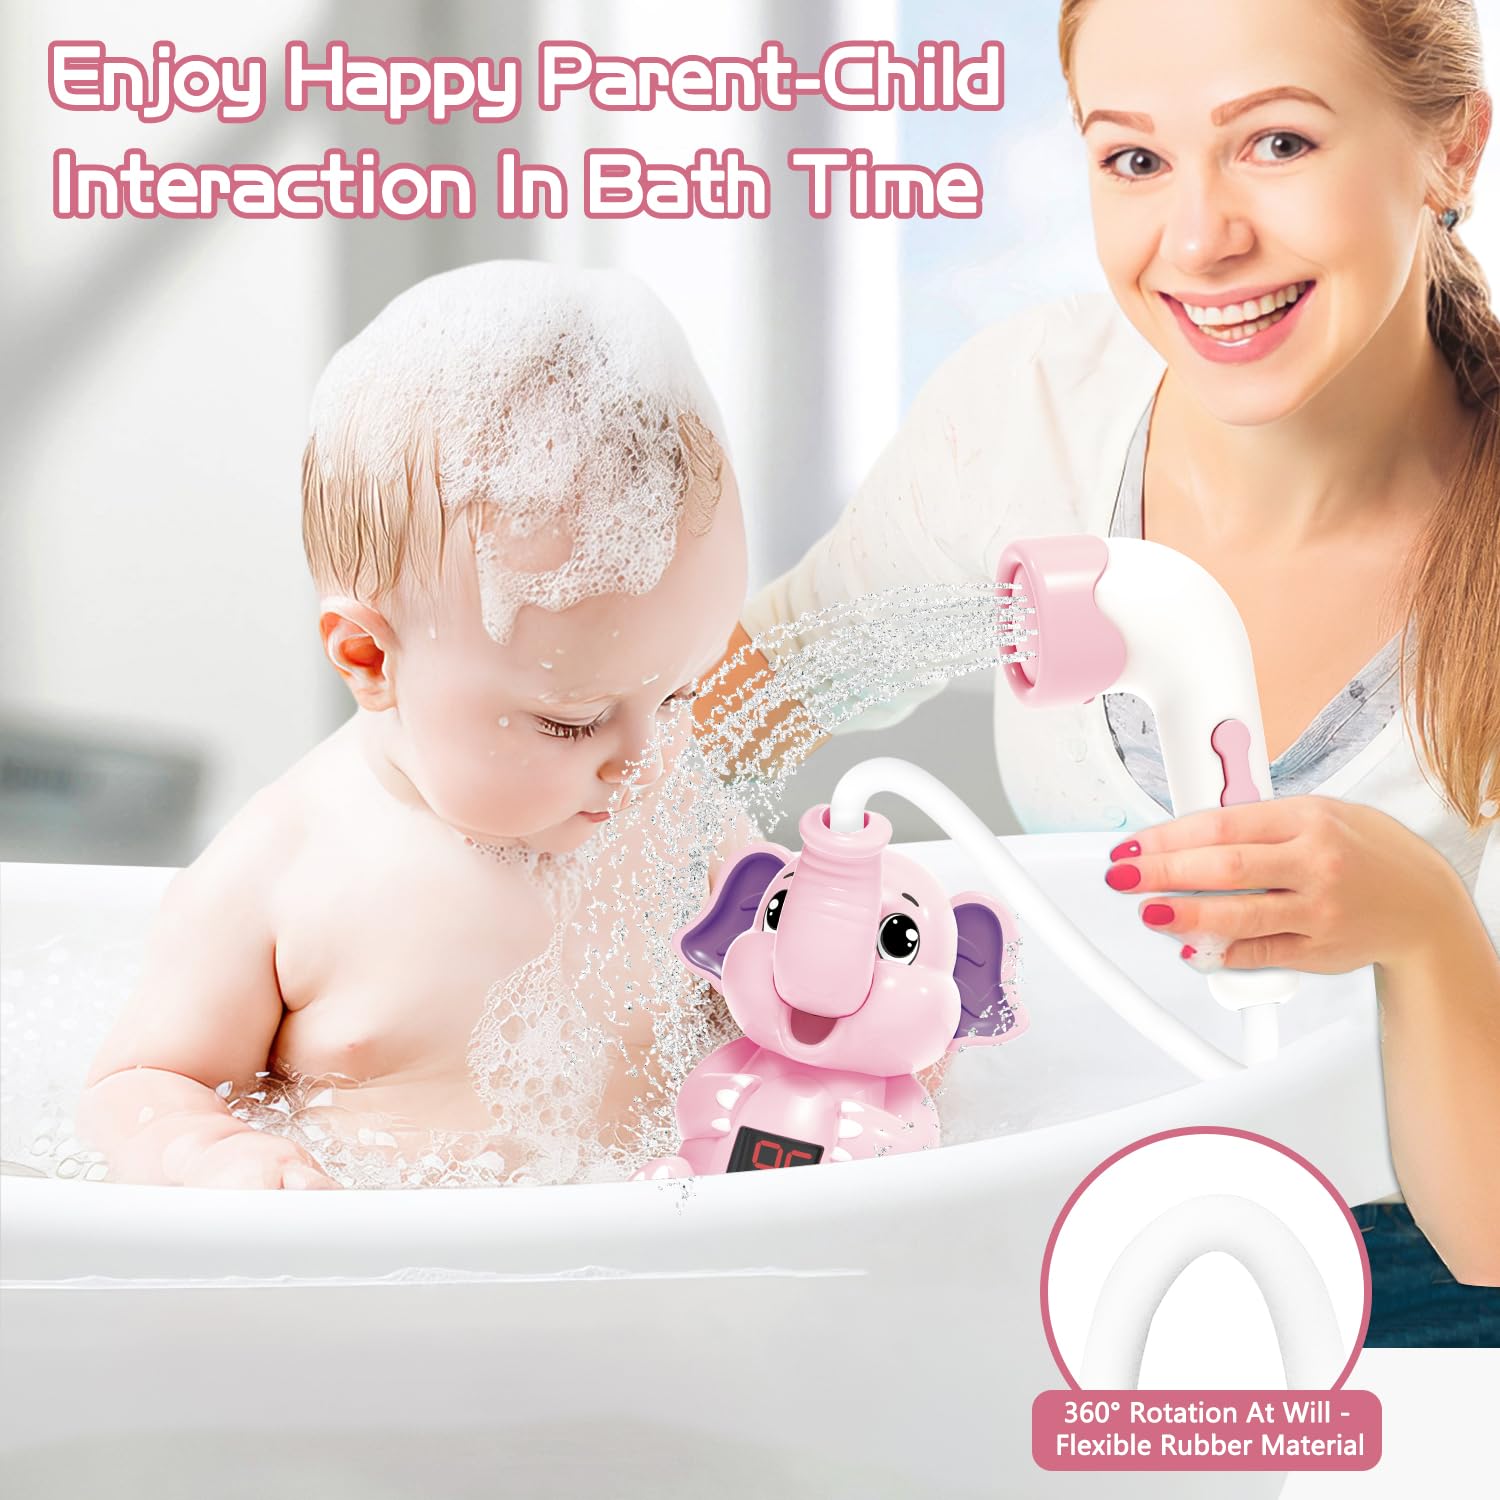 Baby Bath Toys Shower Head Elephant Design Bathtub Sprinkler with Digital LED Temperature Display,Baby Bath Essentials Birthday Gift for Newborn Infants Toddlers Babies 18+ Months - Gray